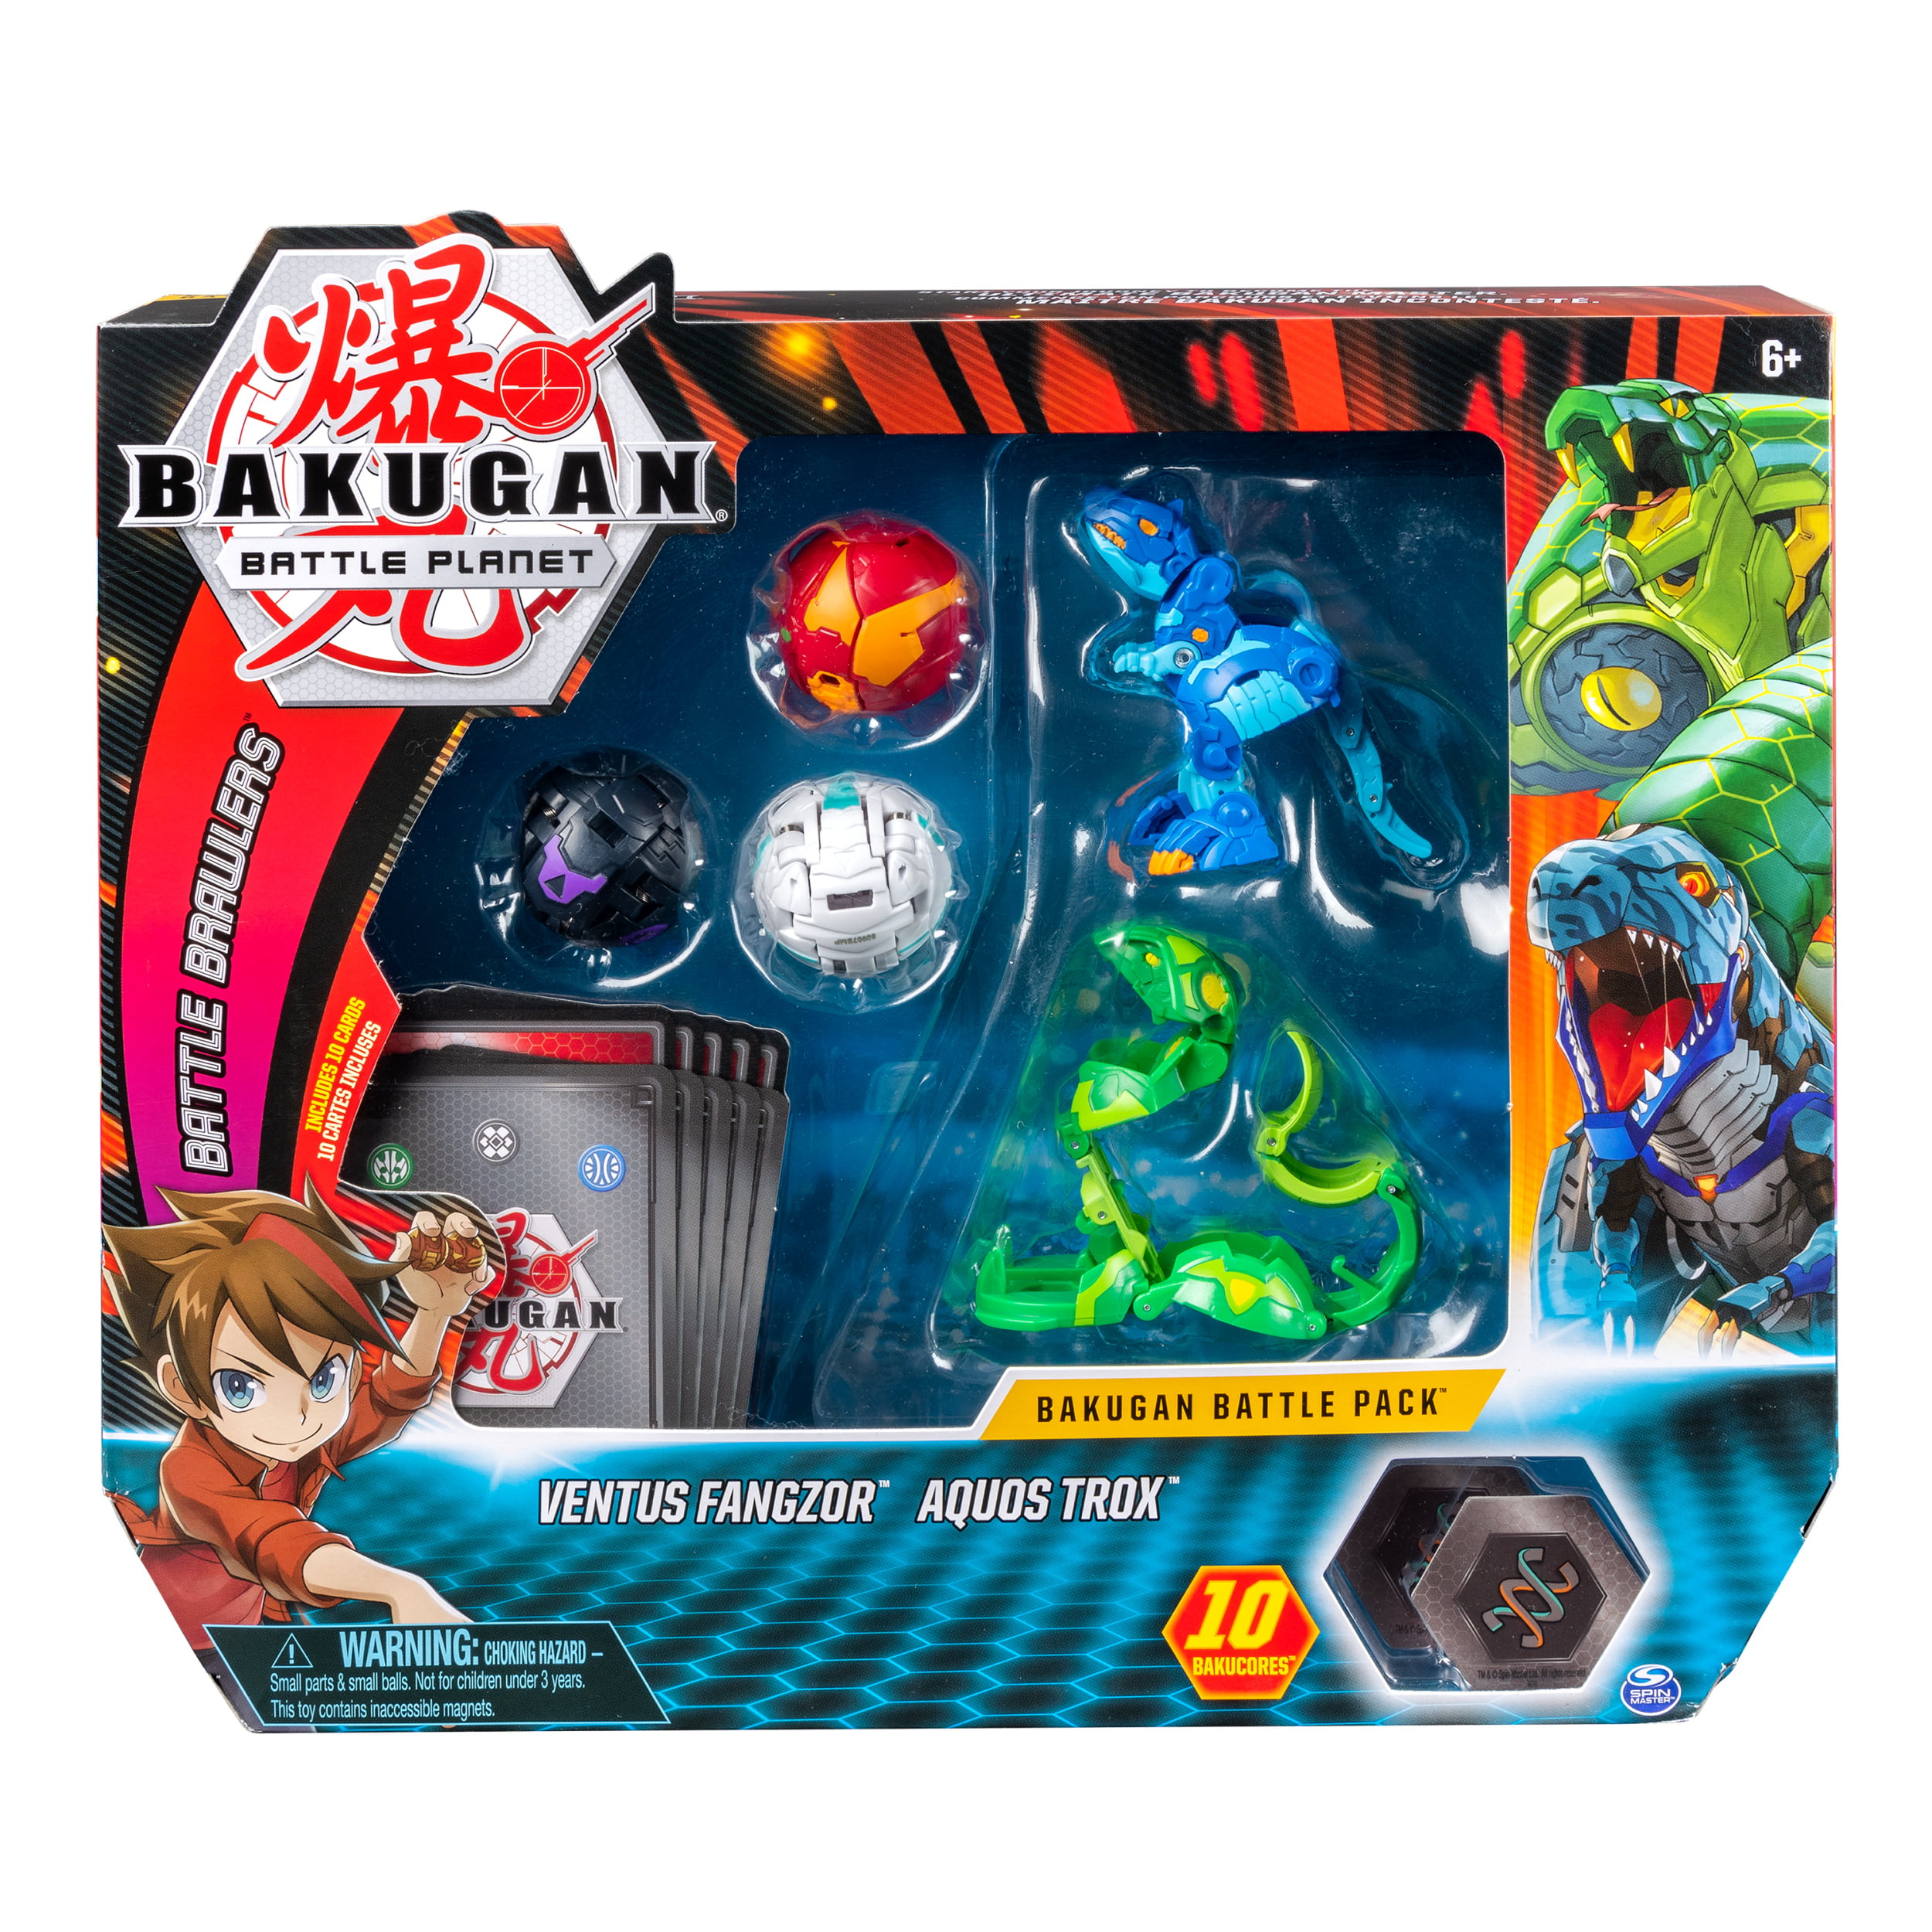 Bakugan Battle planet battle pack figures and card set